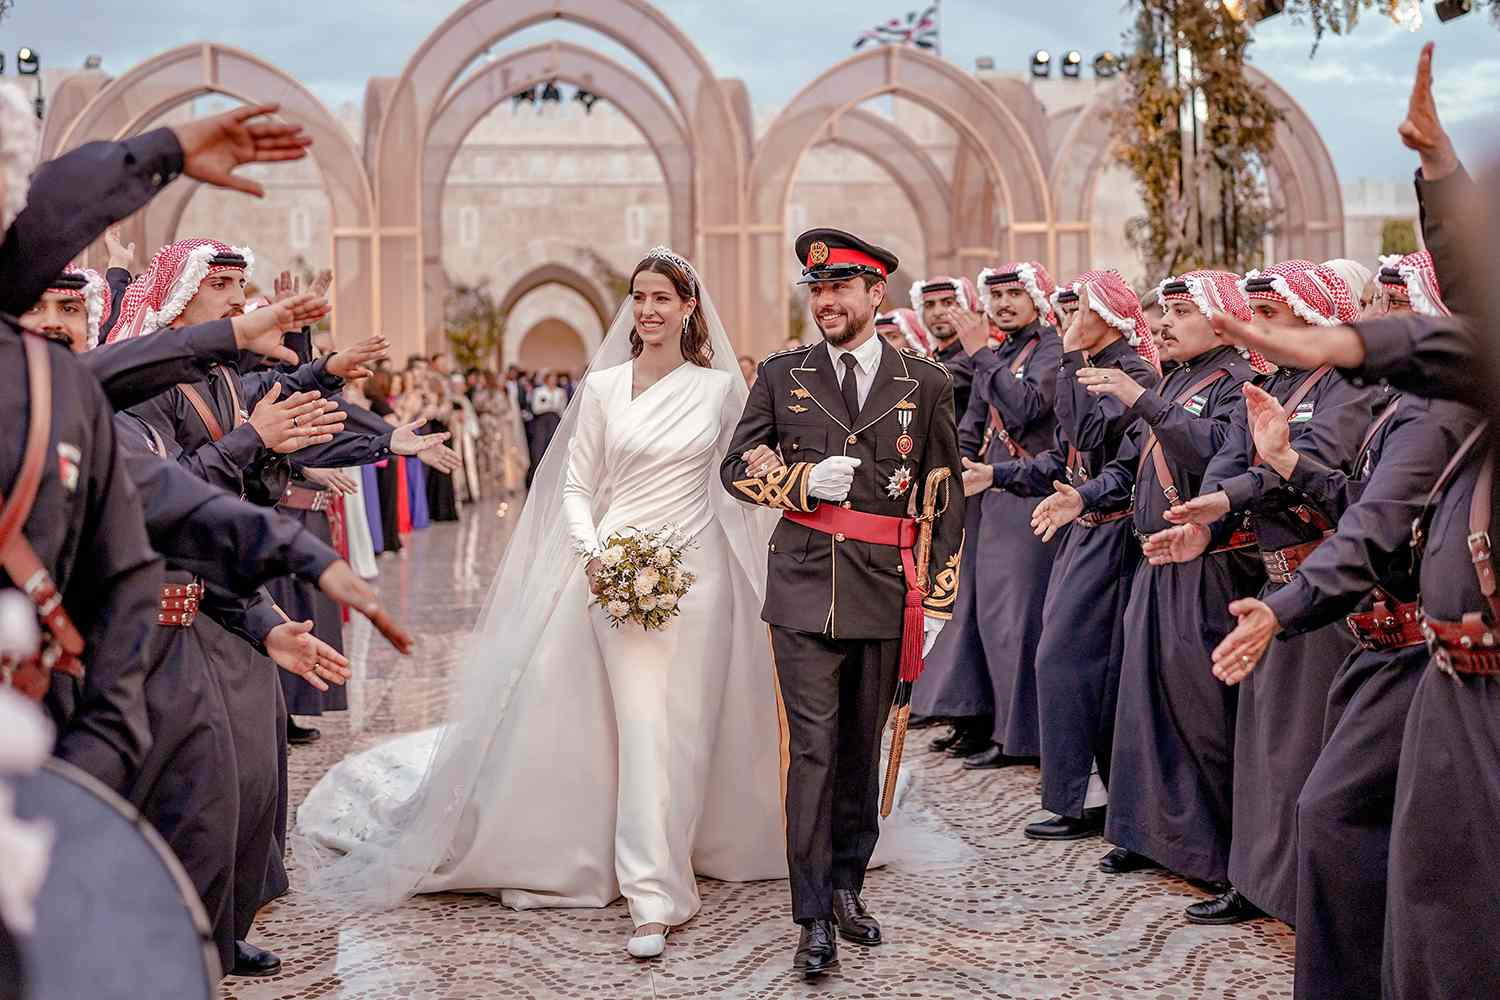 jordan-crown-prince-al-hussein-princess-rajwa-al-hussein-wedding-060223-1-6aff0e34686b4c1692baa1cf4e9ed2f5.jpg